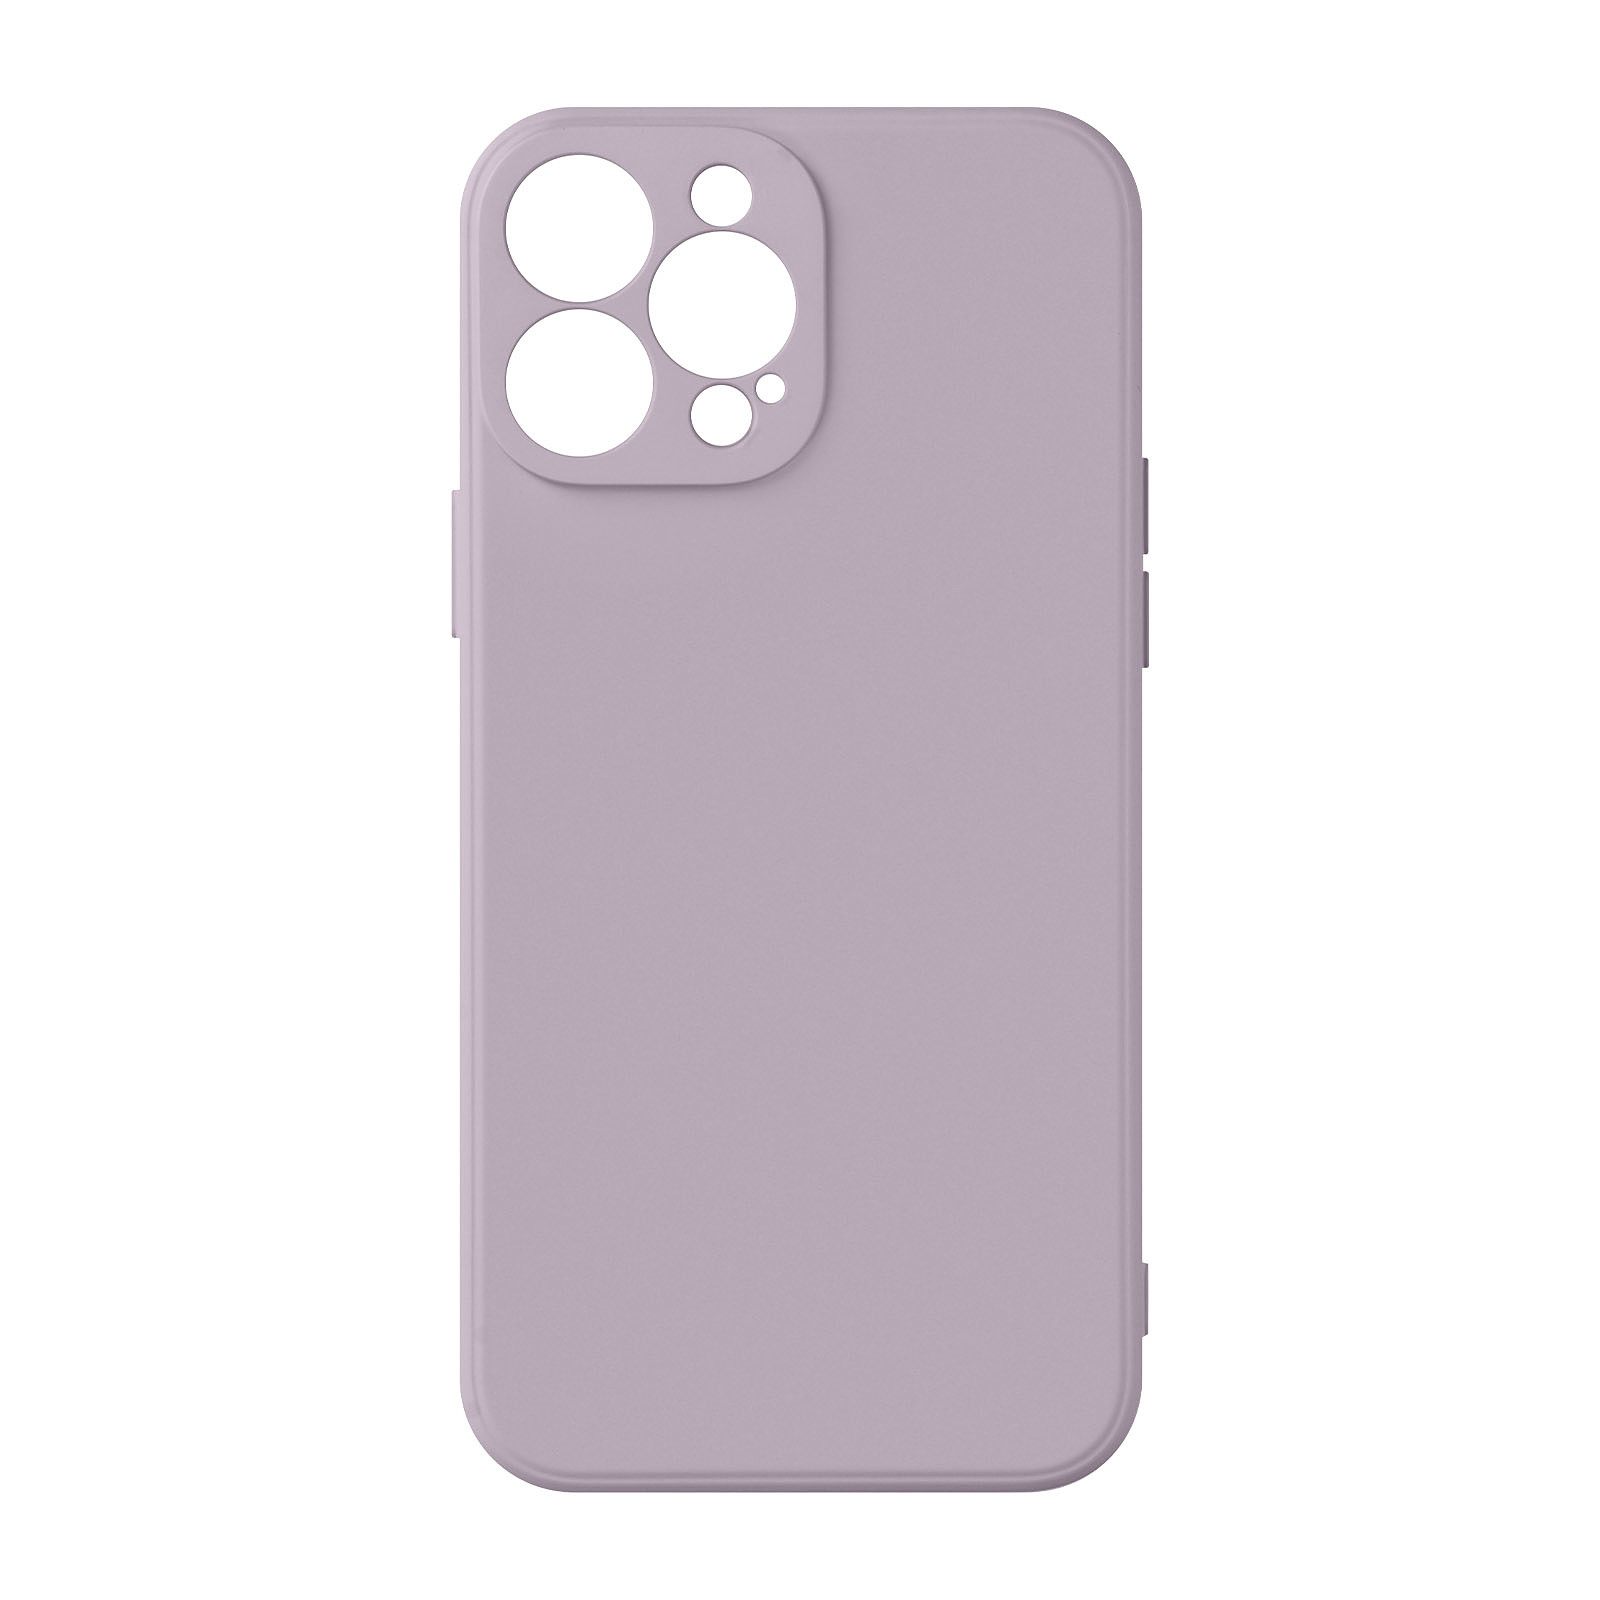 Avizar Coque pour iPhone 13 Pro Max Silicone Semi-Rigide avec Finition Soft Touch violet - Coque telephone Avizar